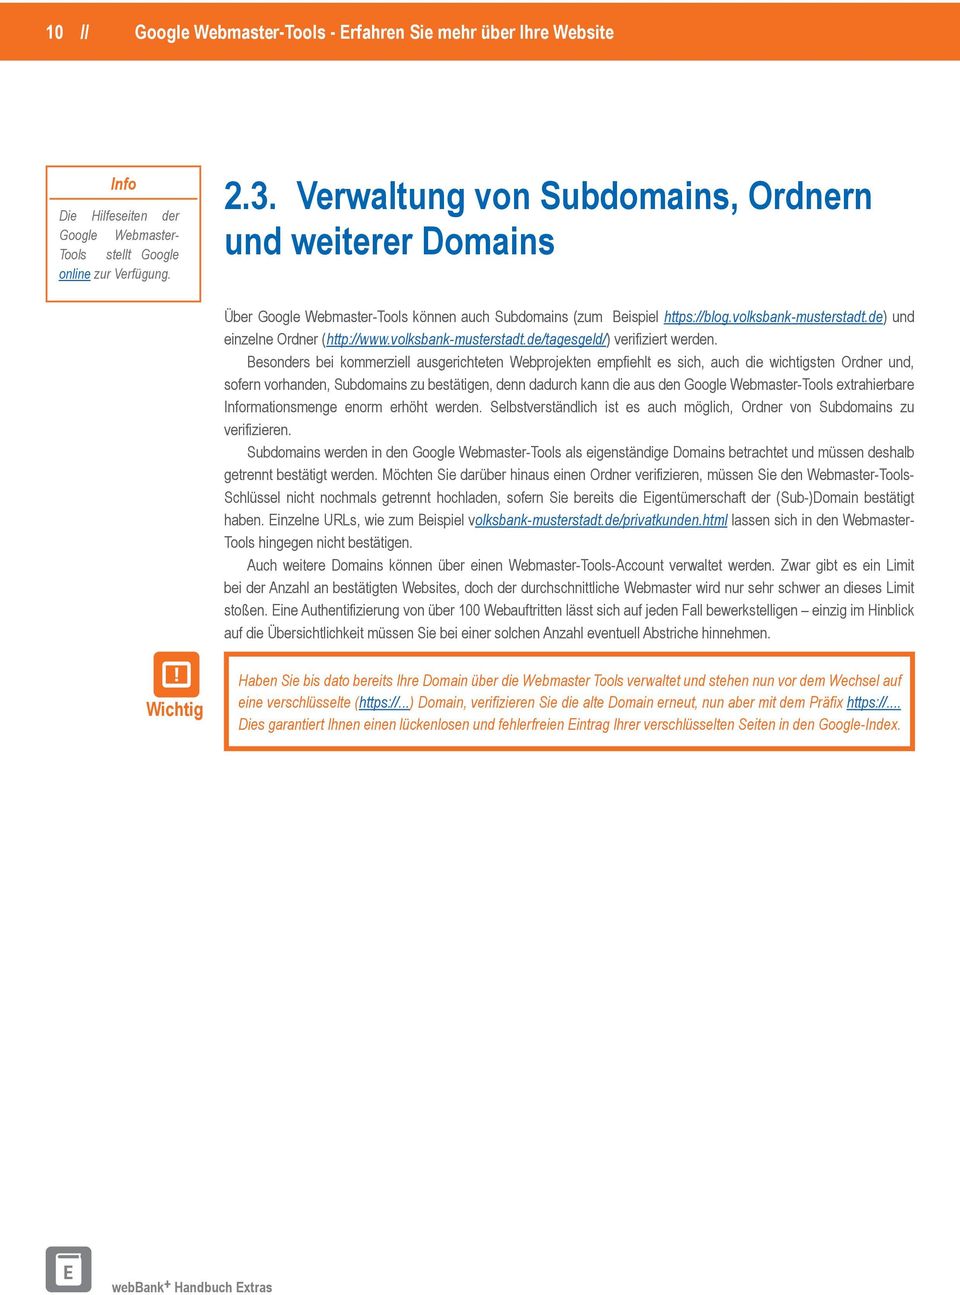 volksbank-musterstadt.de/tagesgeld/) verifiziert werden.